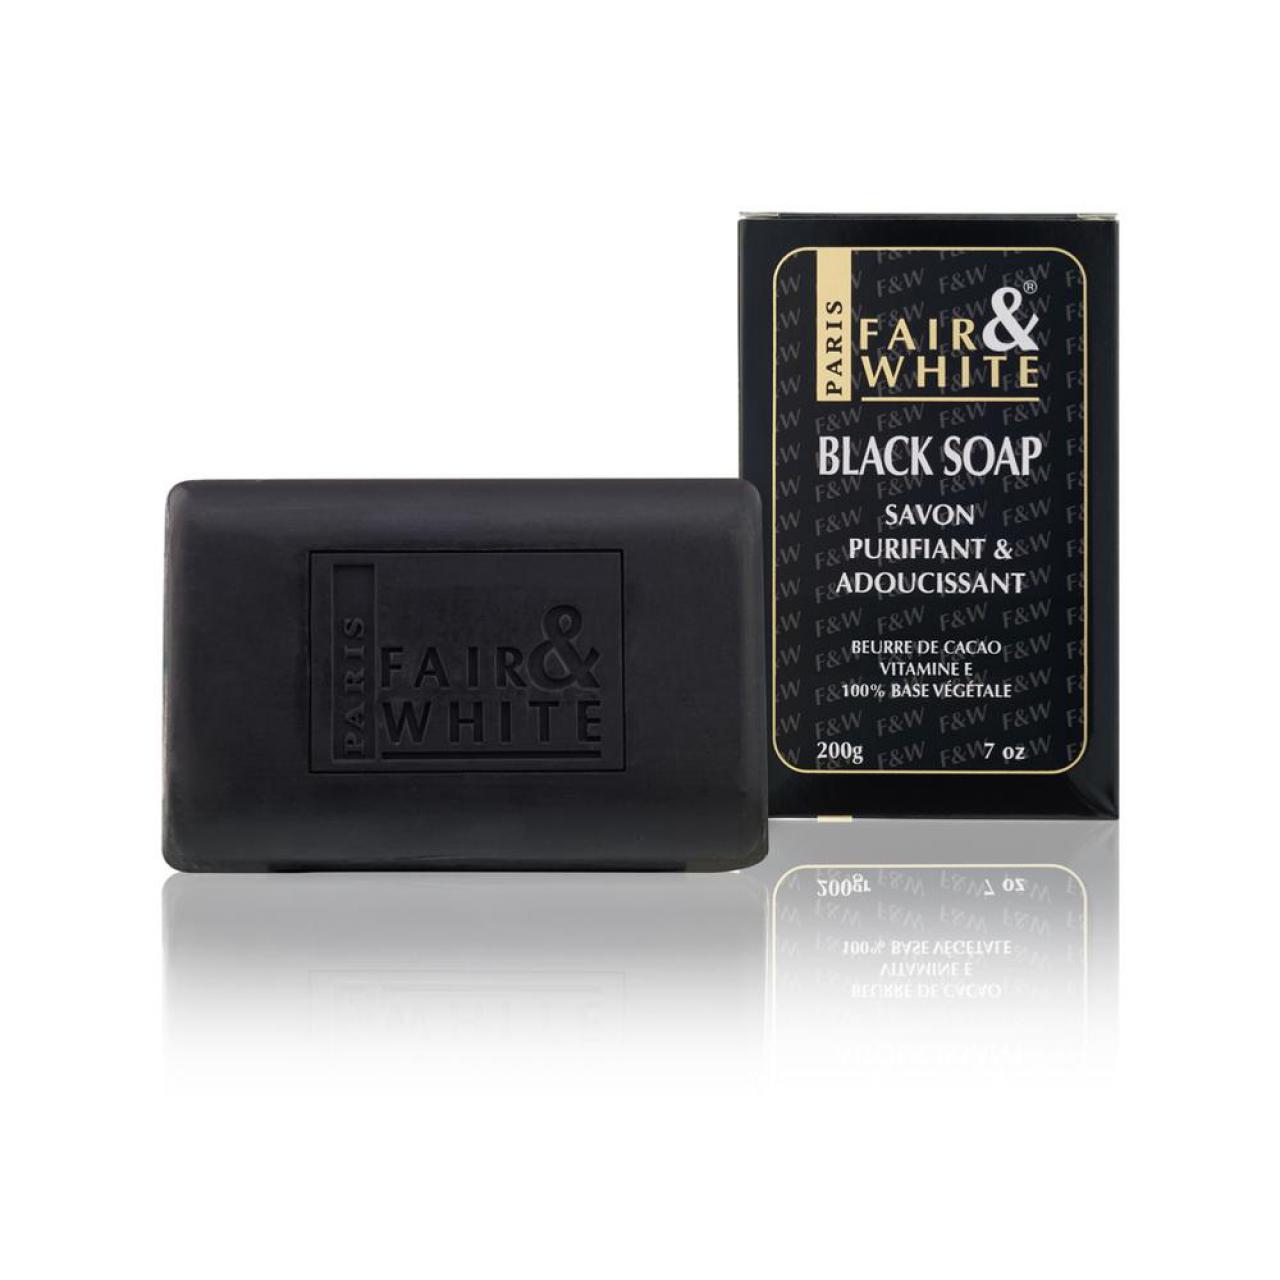 Fair & white black soap